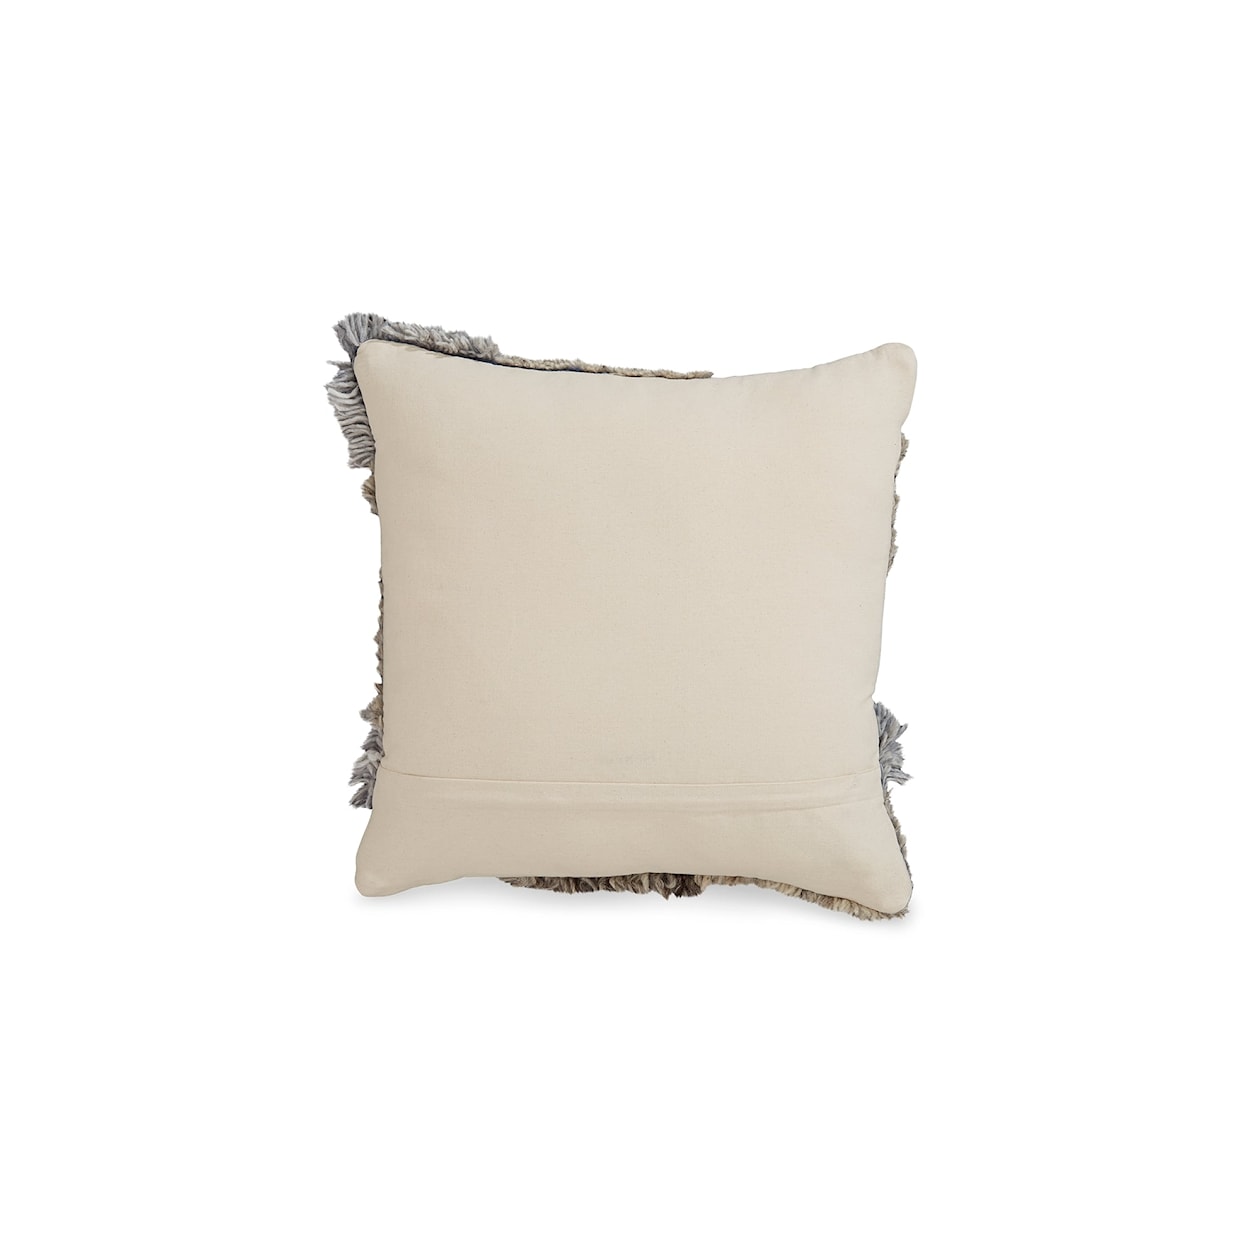 Benchcraft Gibbend Pillow (Set of 4)